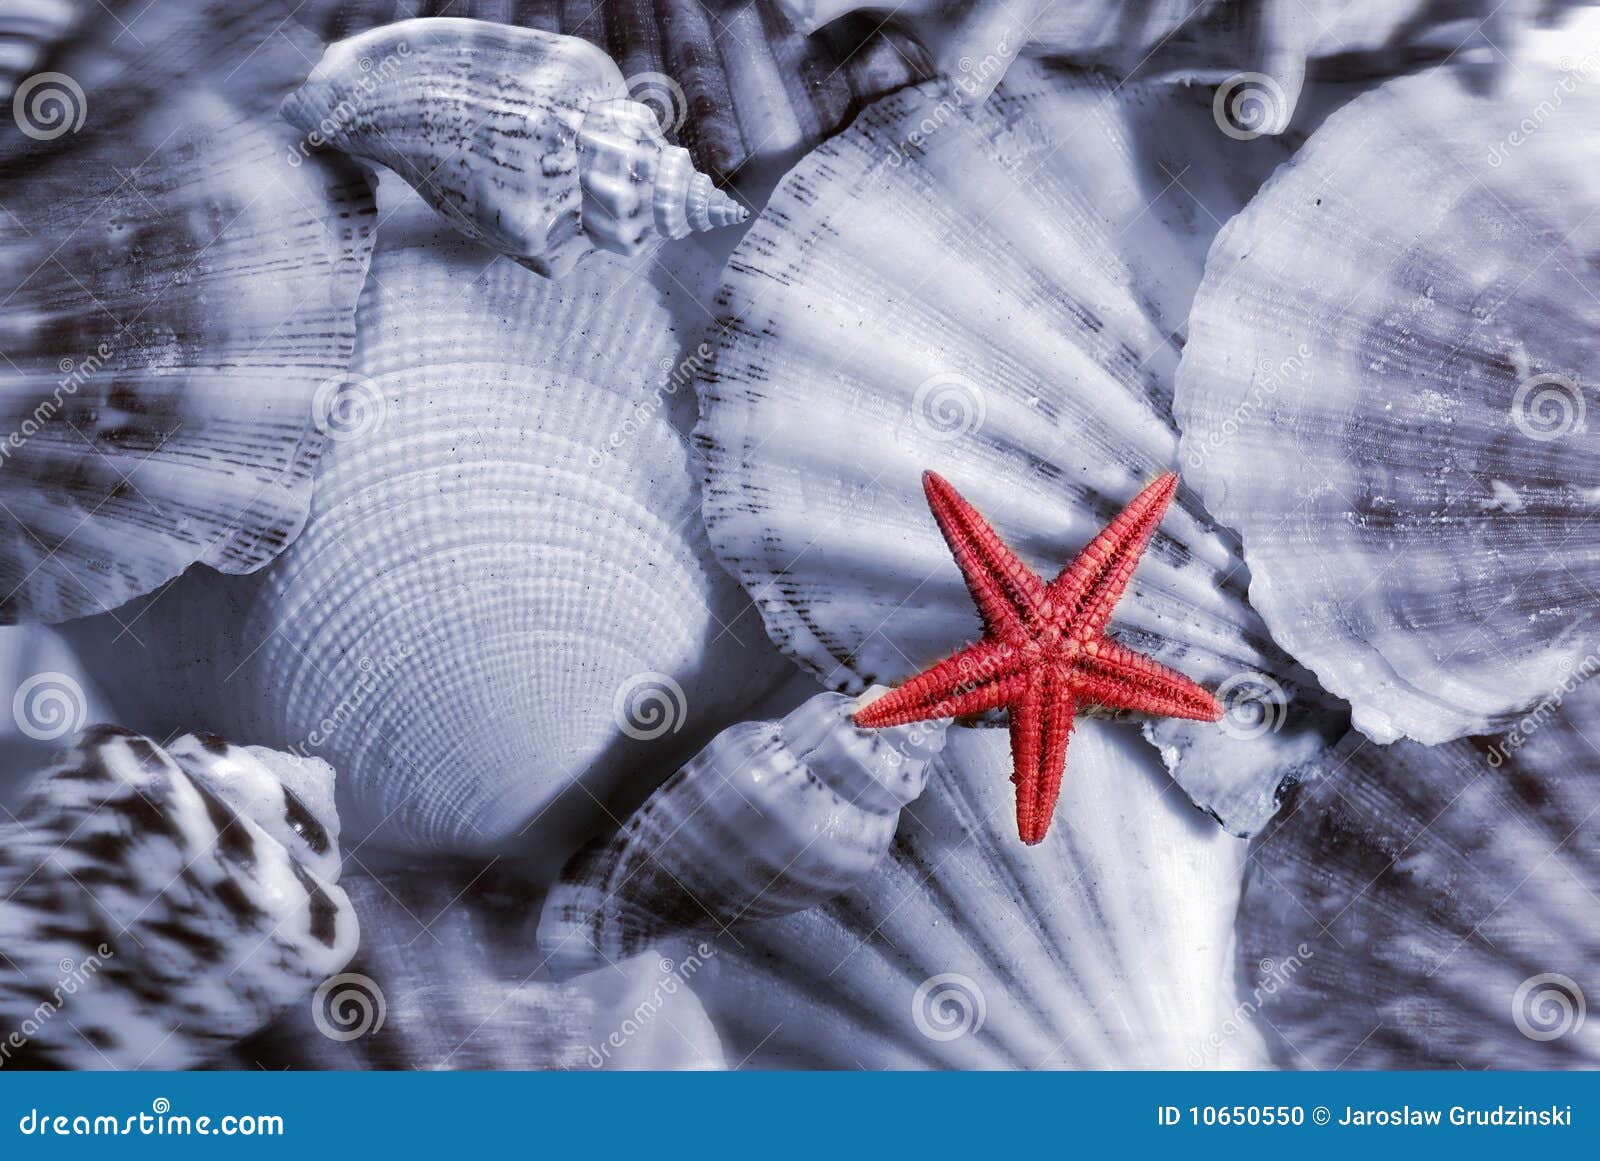 Sea shells background stock photo. Image of shellfish - 10650550